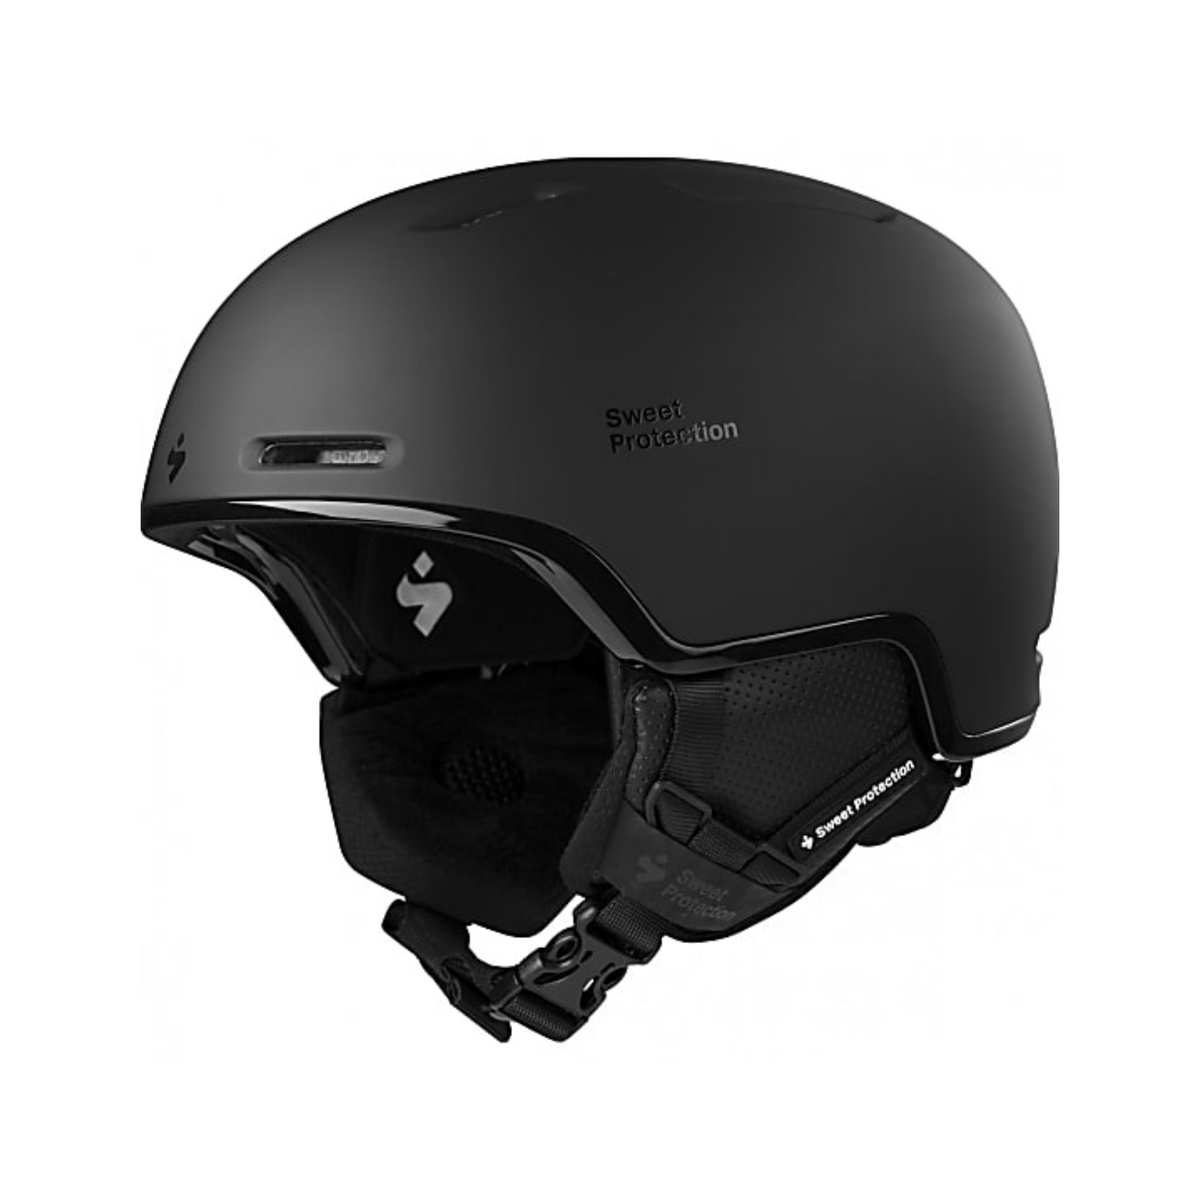 SWEET PROTECTION SWITCHER MIPS ski helmet 840053-mchor